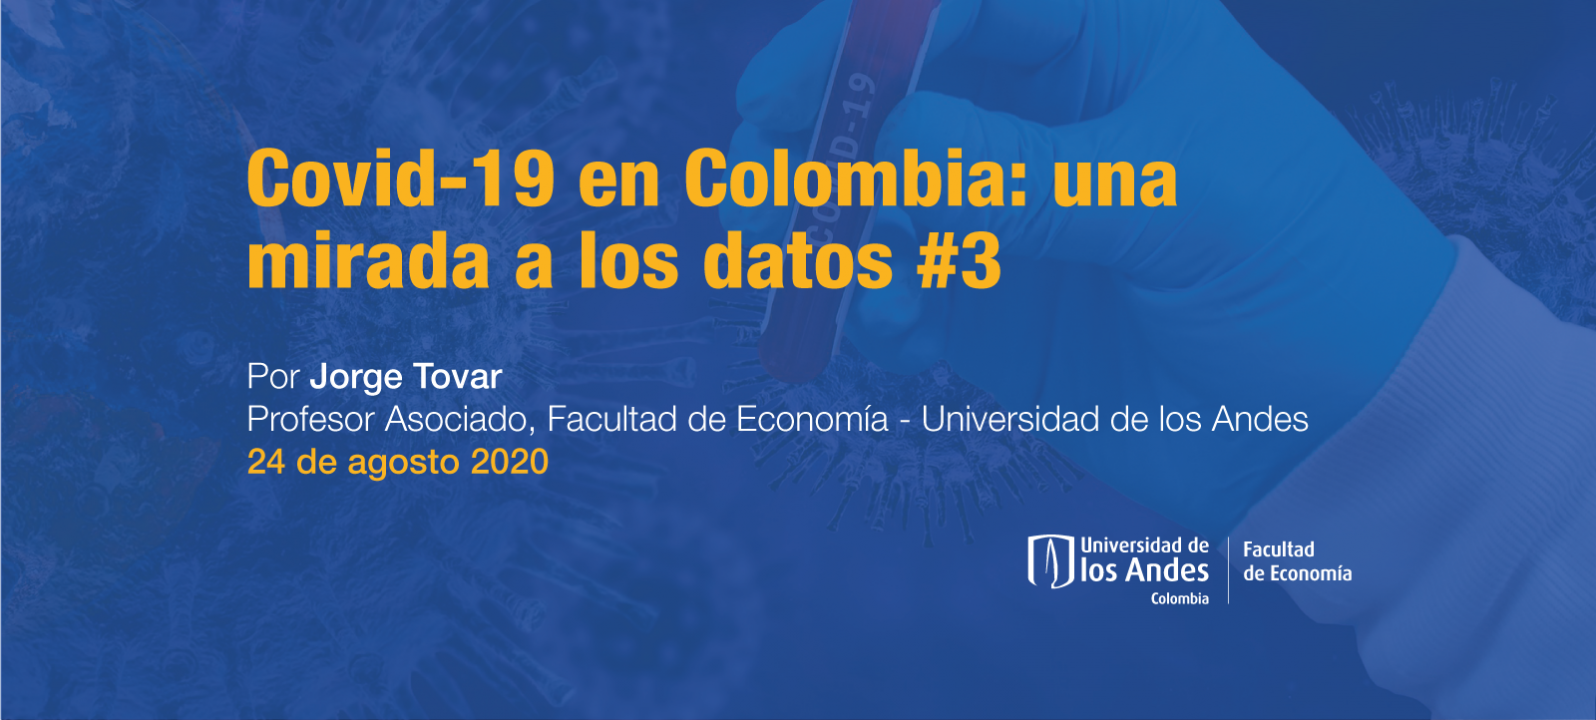 Covid-19-en-Colombia3.png